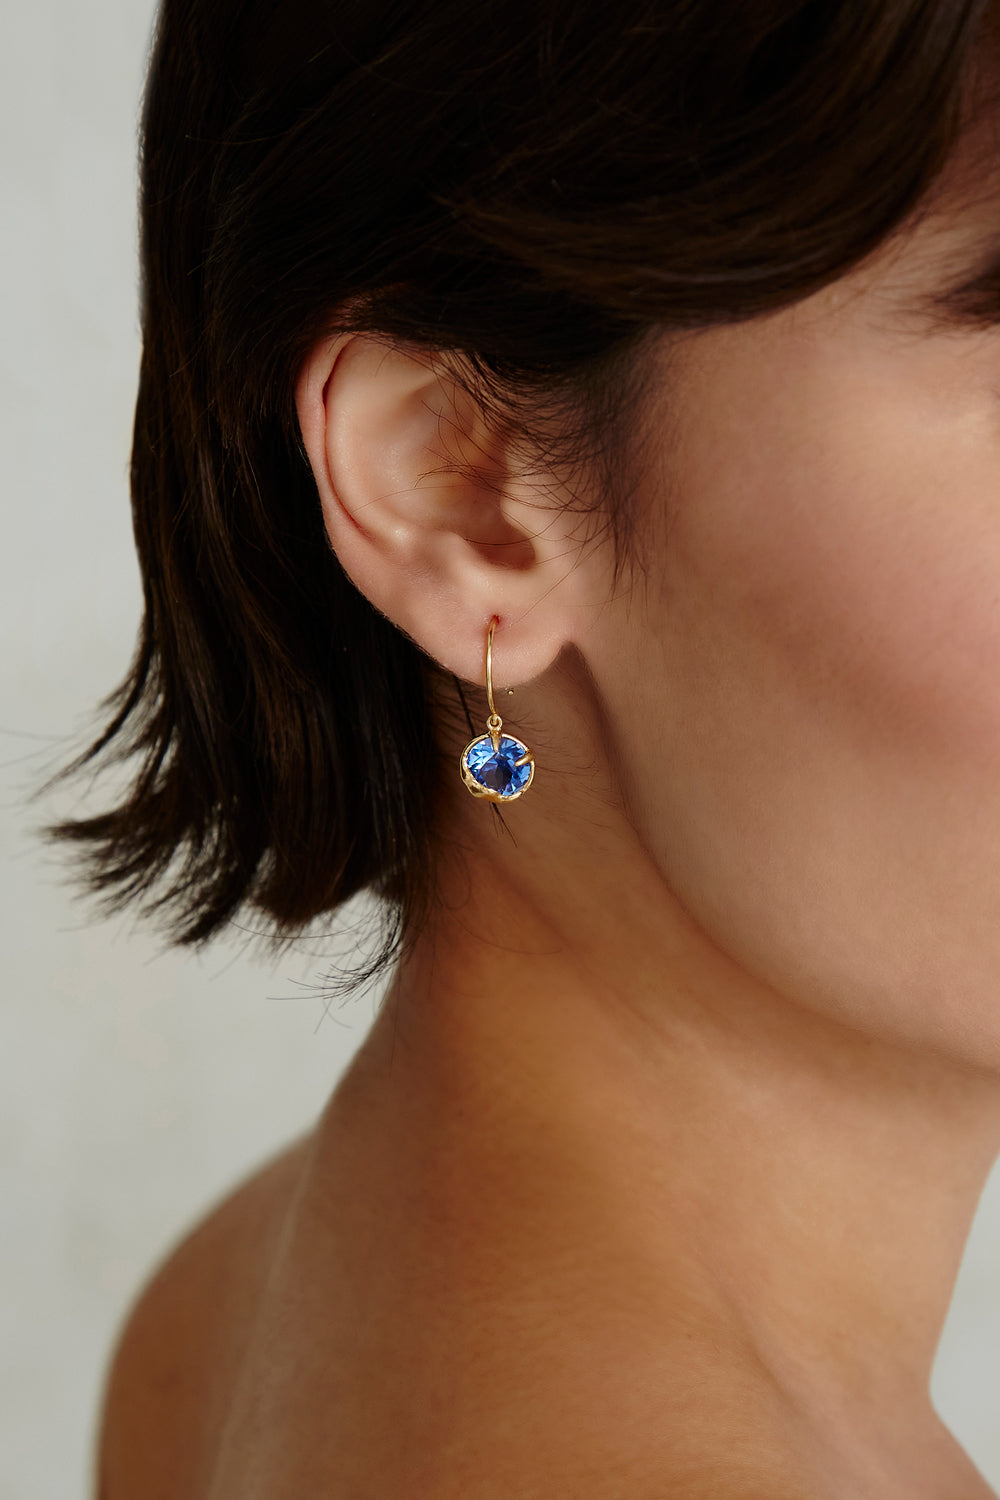 Sapphire Crystal Earrings